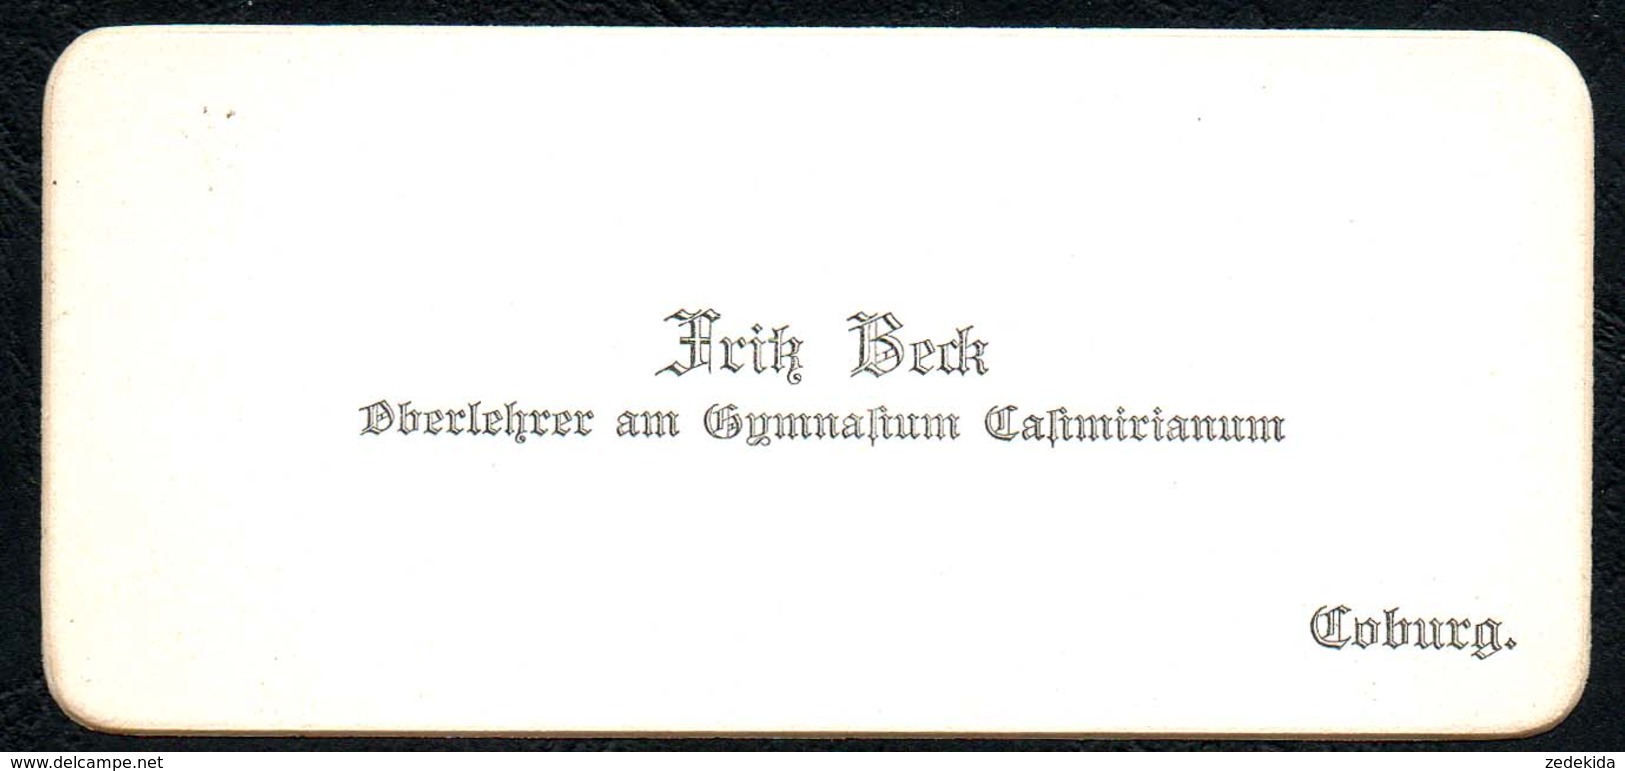 B6456 - Coburg - Fritz Beck - Oberlehrer Am Gymnasium Castmirianum - Visitenkarte - Visitenkarten